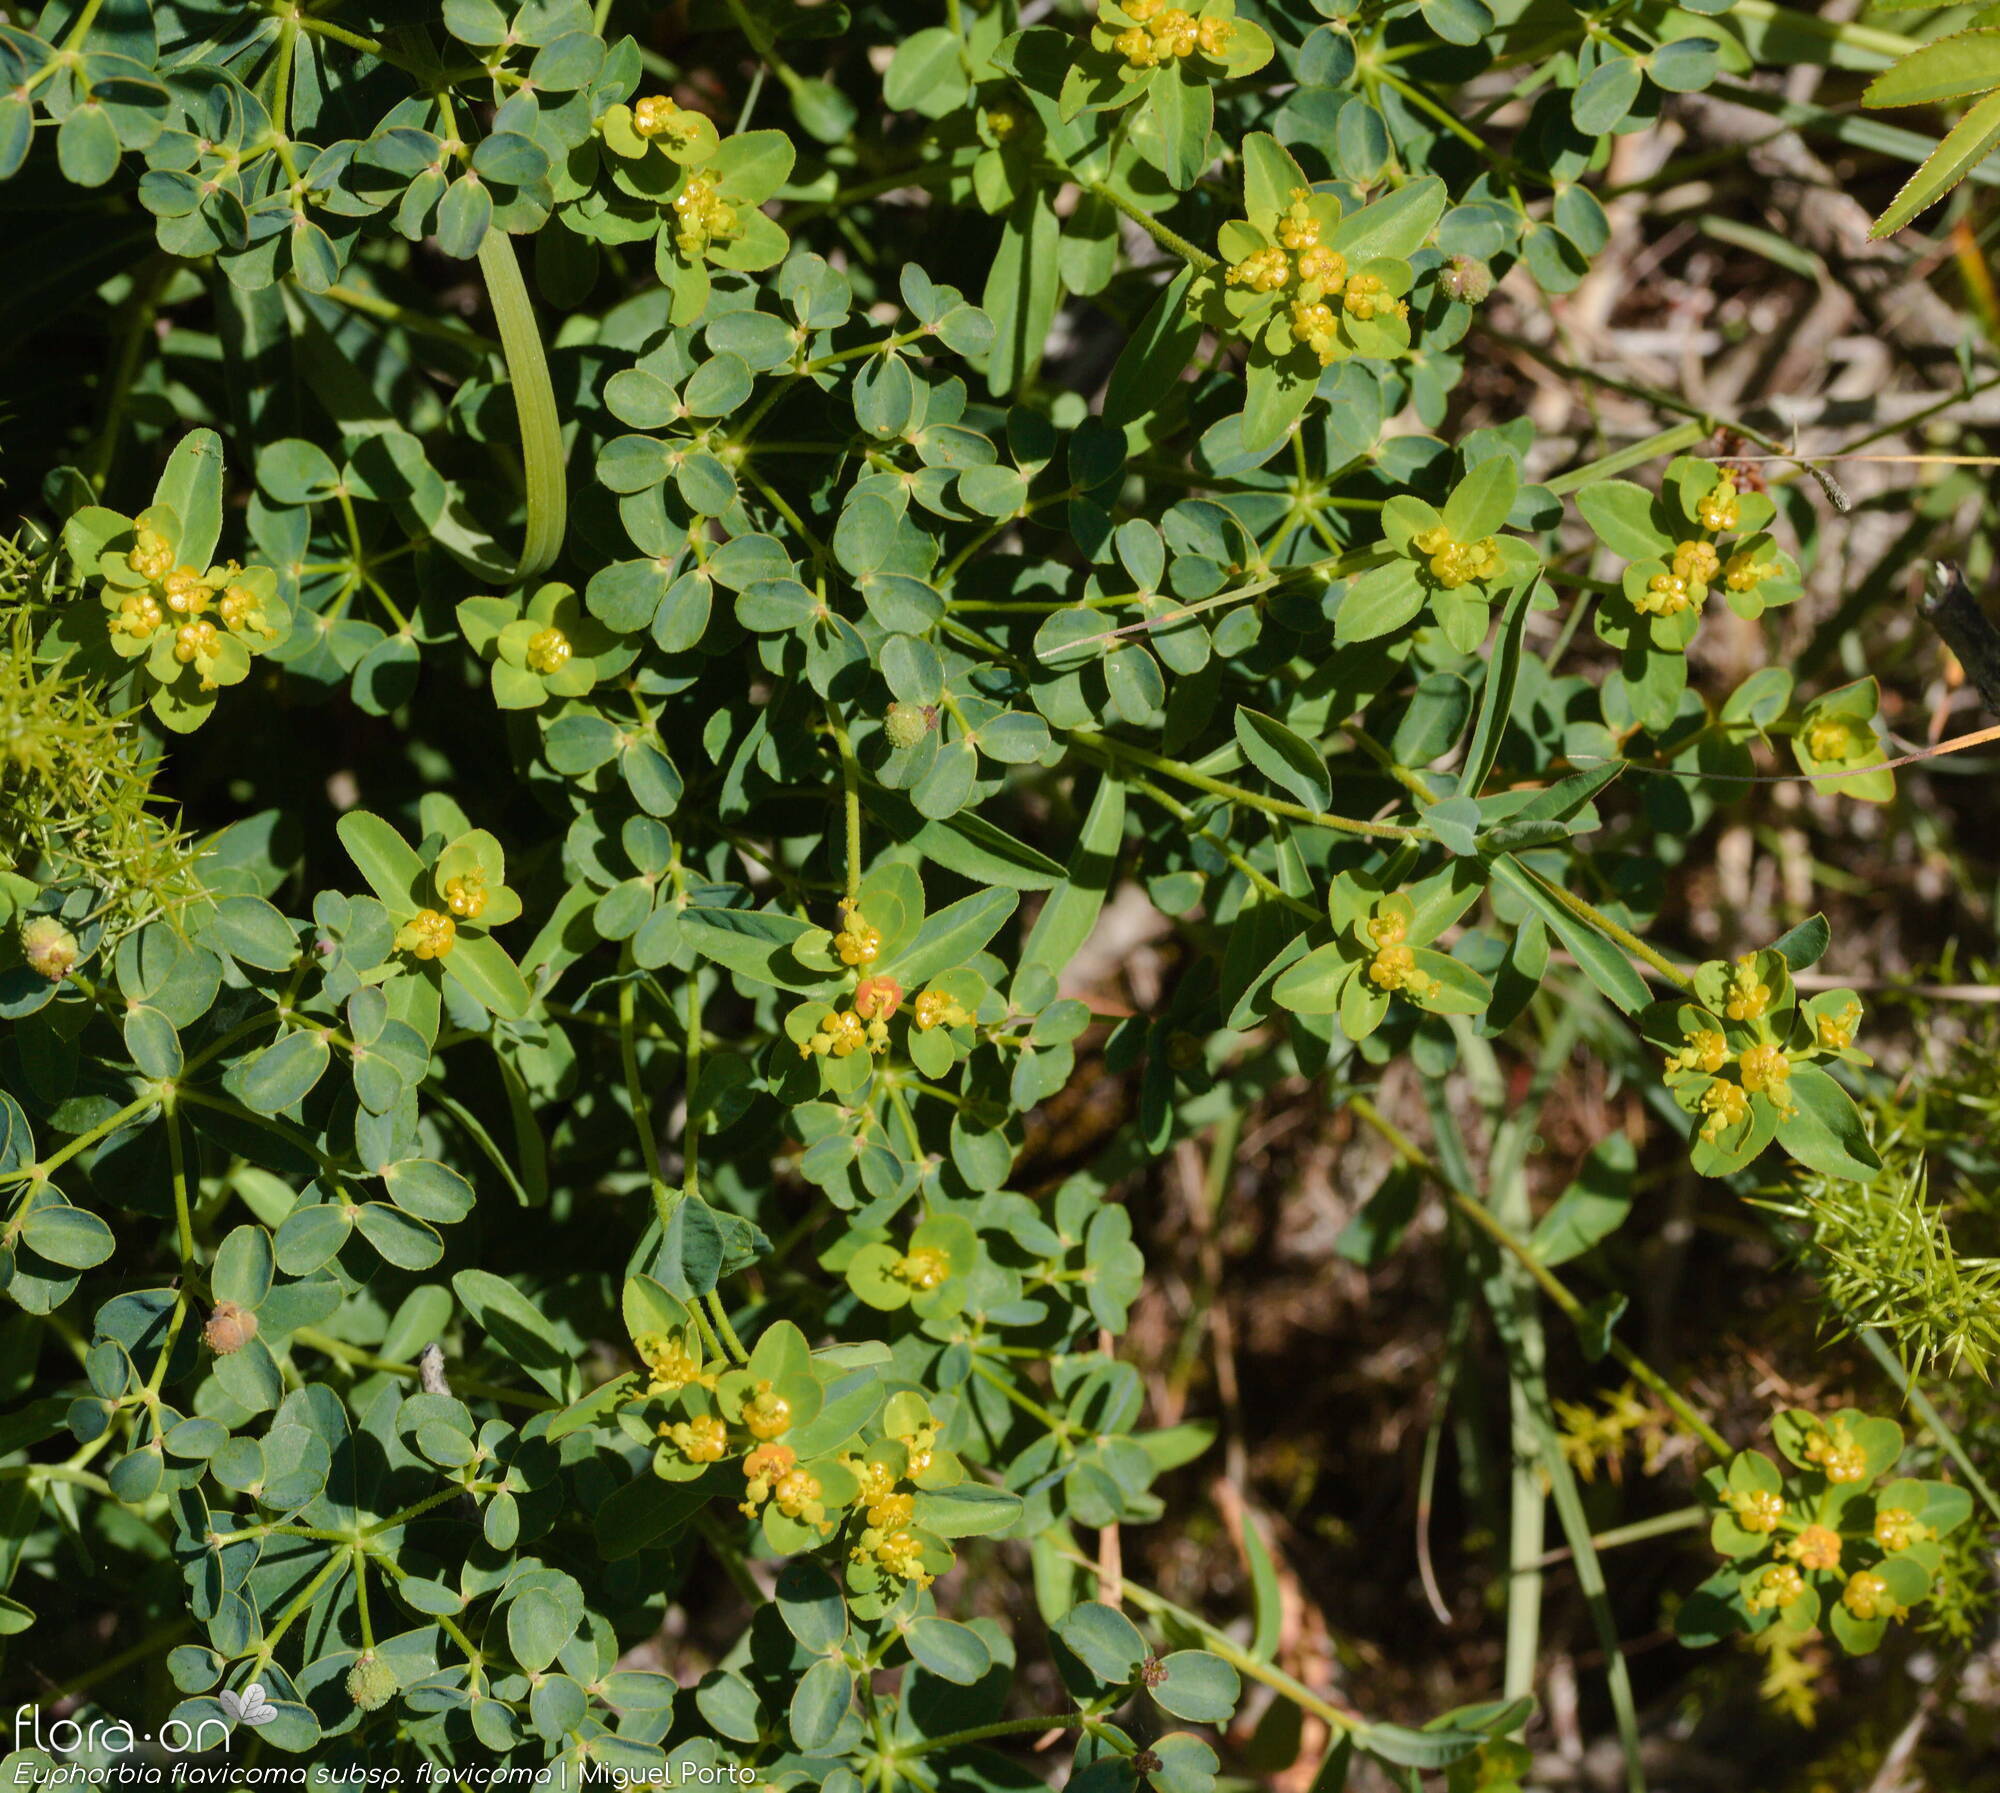 Euphorbia flavicoma flavicoma - Hábito | Miguel Porto; CC BY-NC 4.0